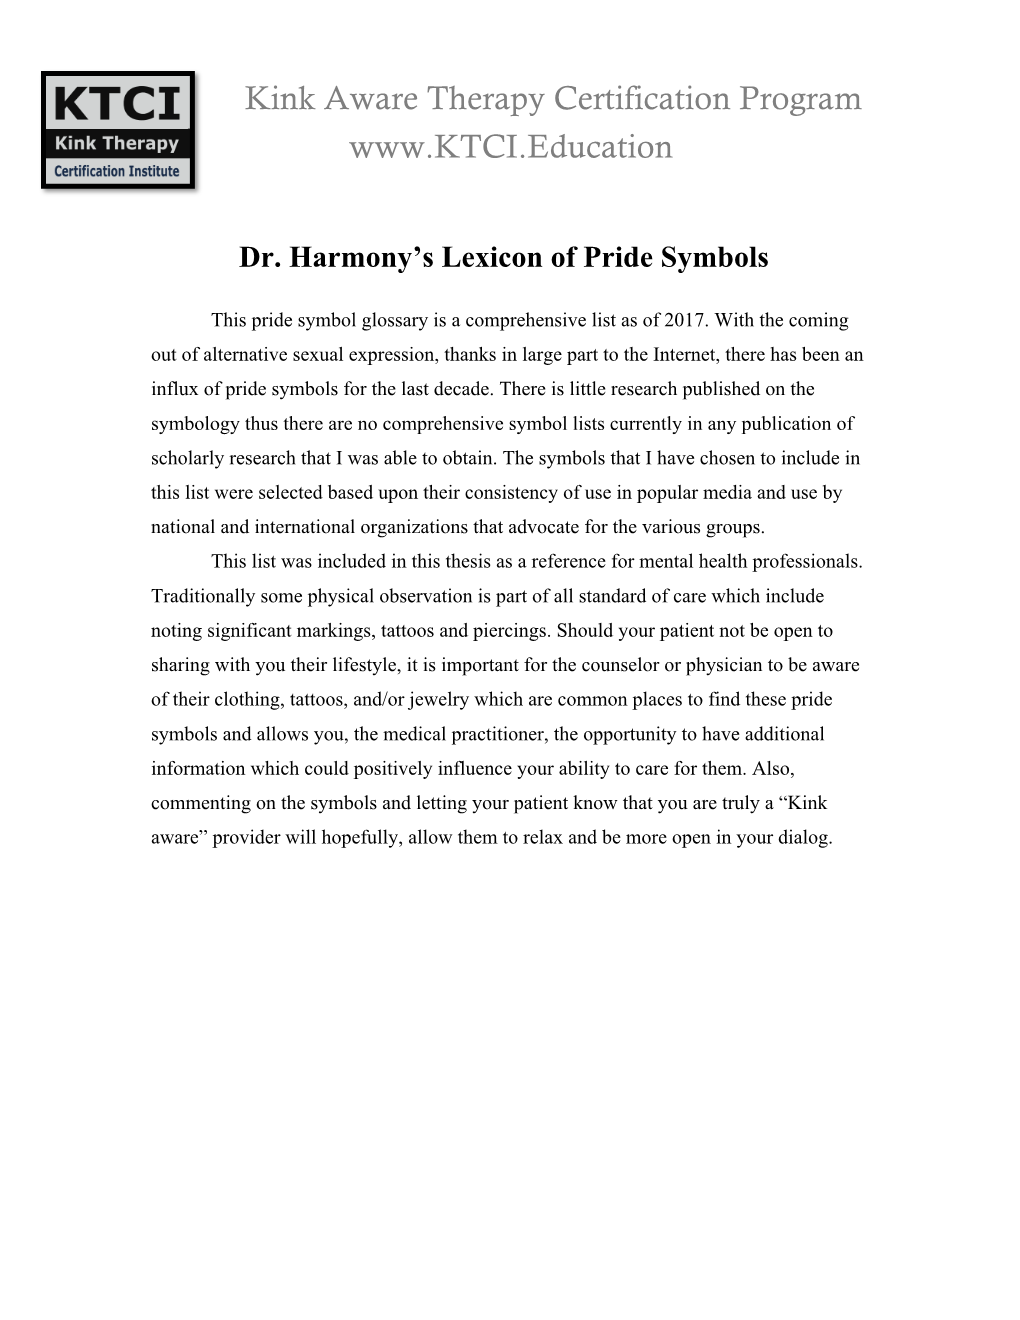 Dr-Harmony-Pride-Lexicon